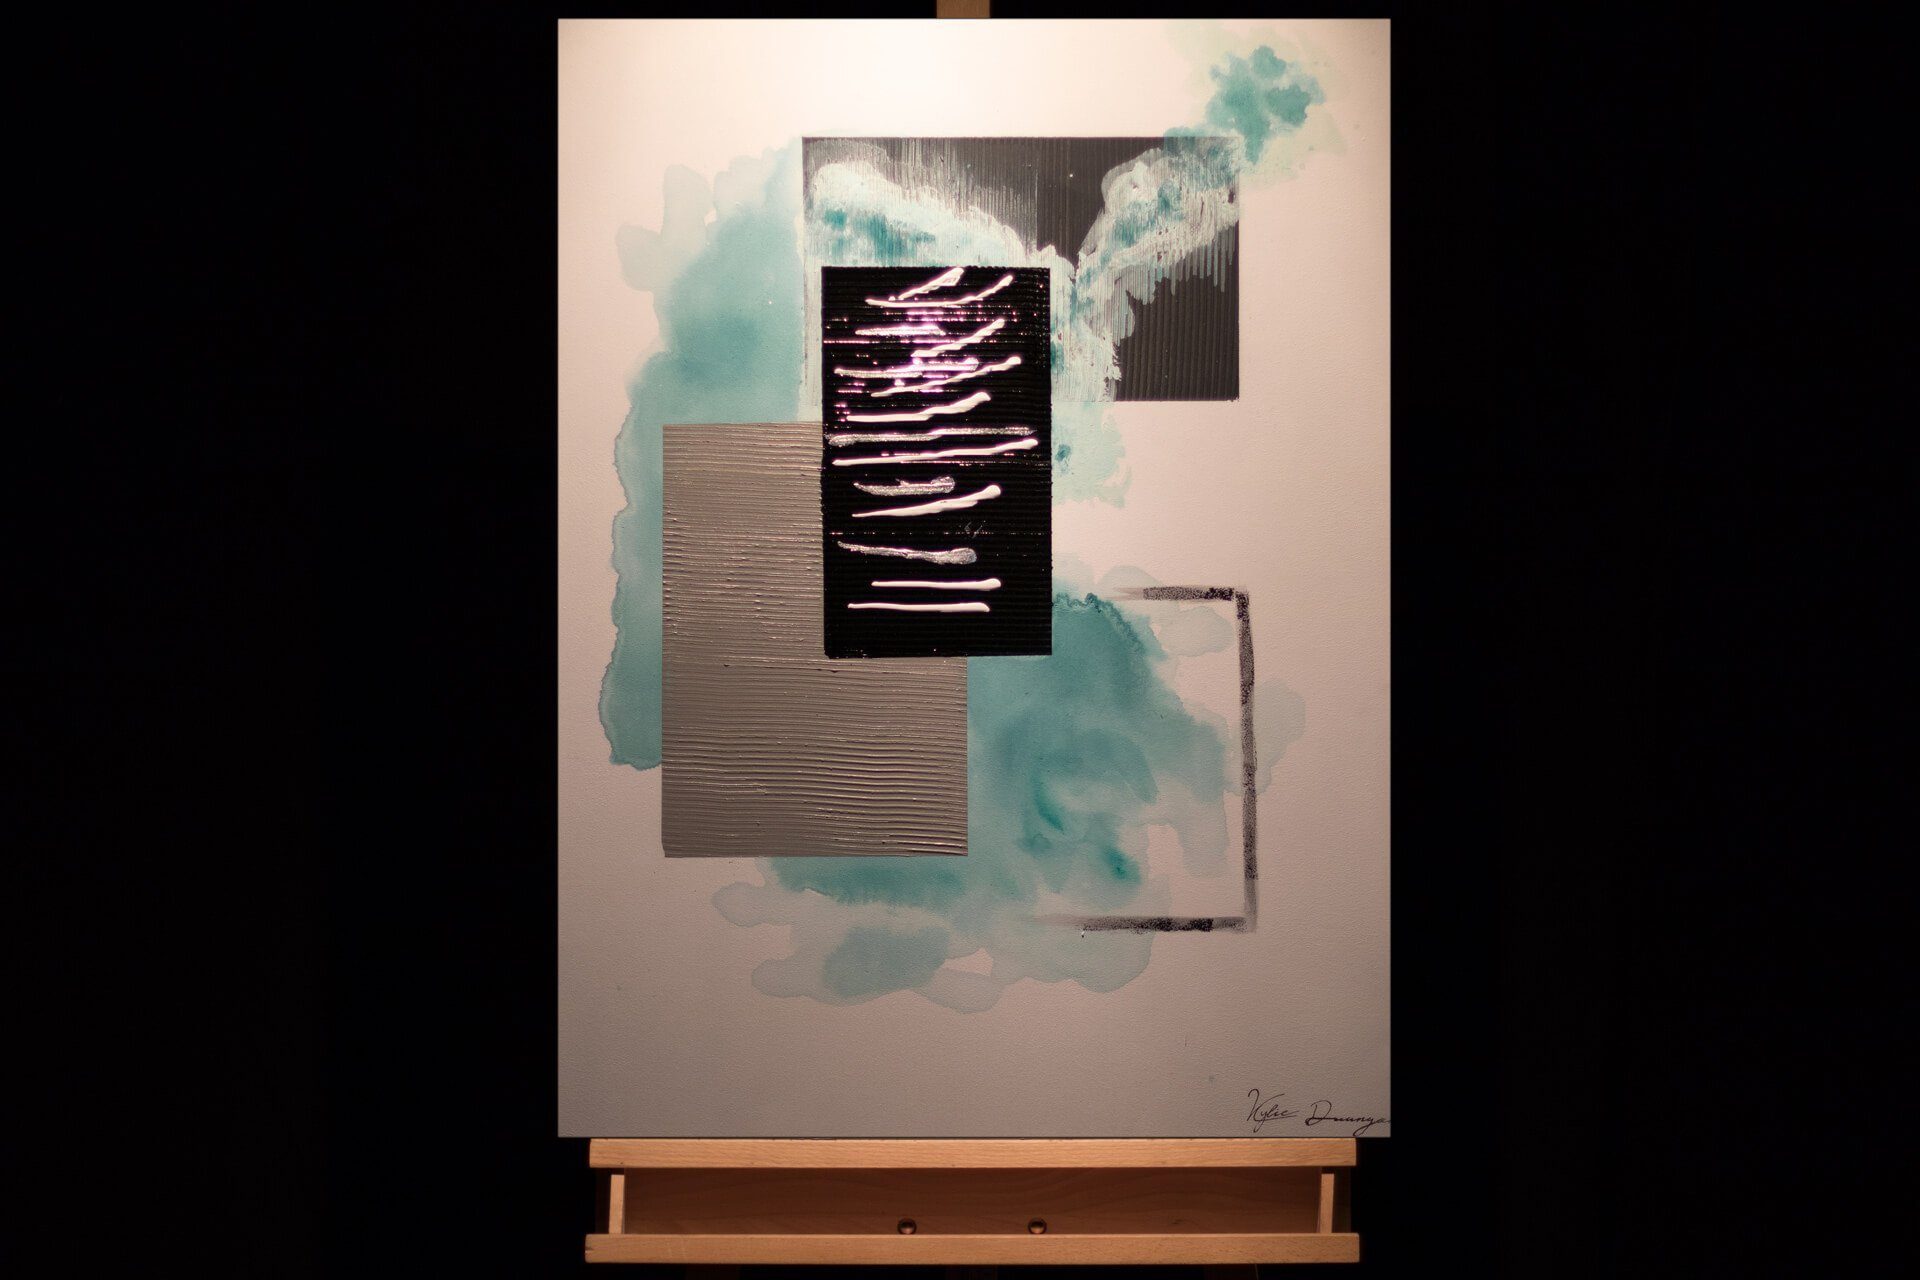 100% Wandbild Cloudy cm, 60x80 Leinwandbild HANDGEMALT Wohnzimmer Gemälde KUNSTLOFT Interaction